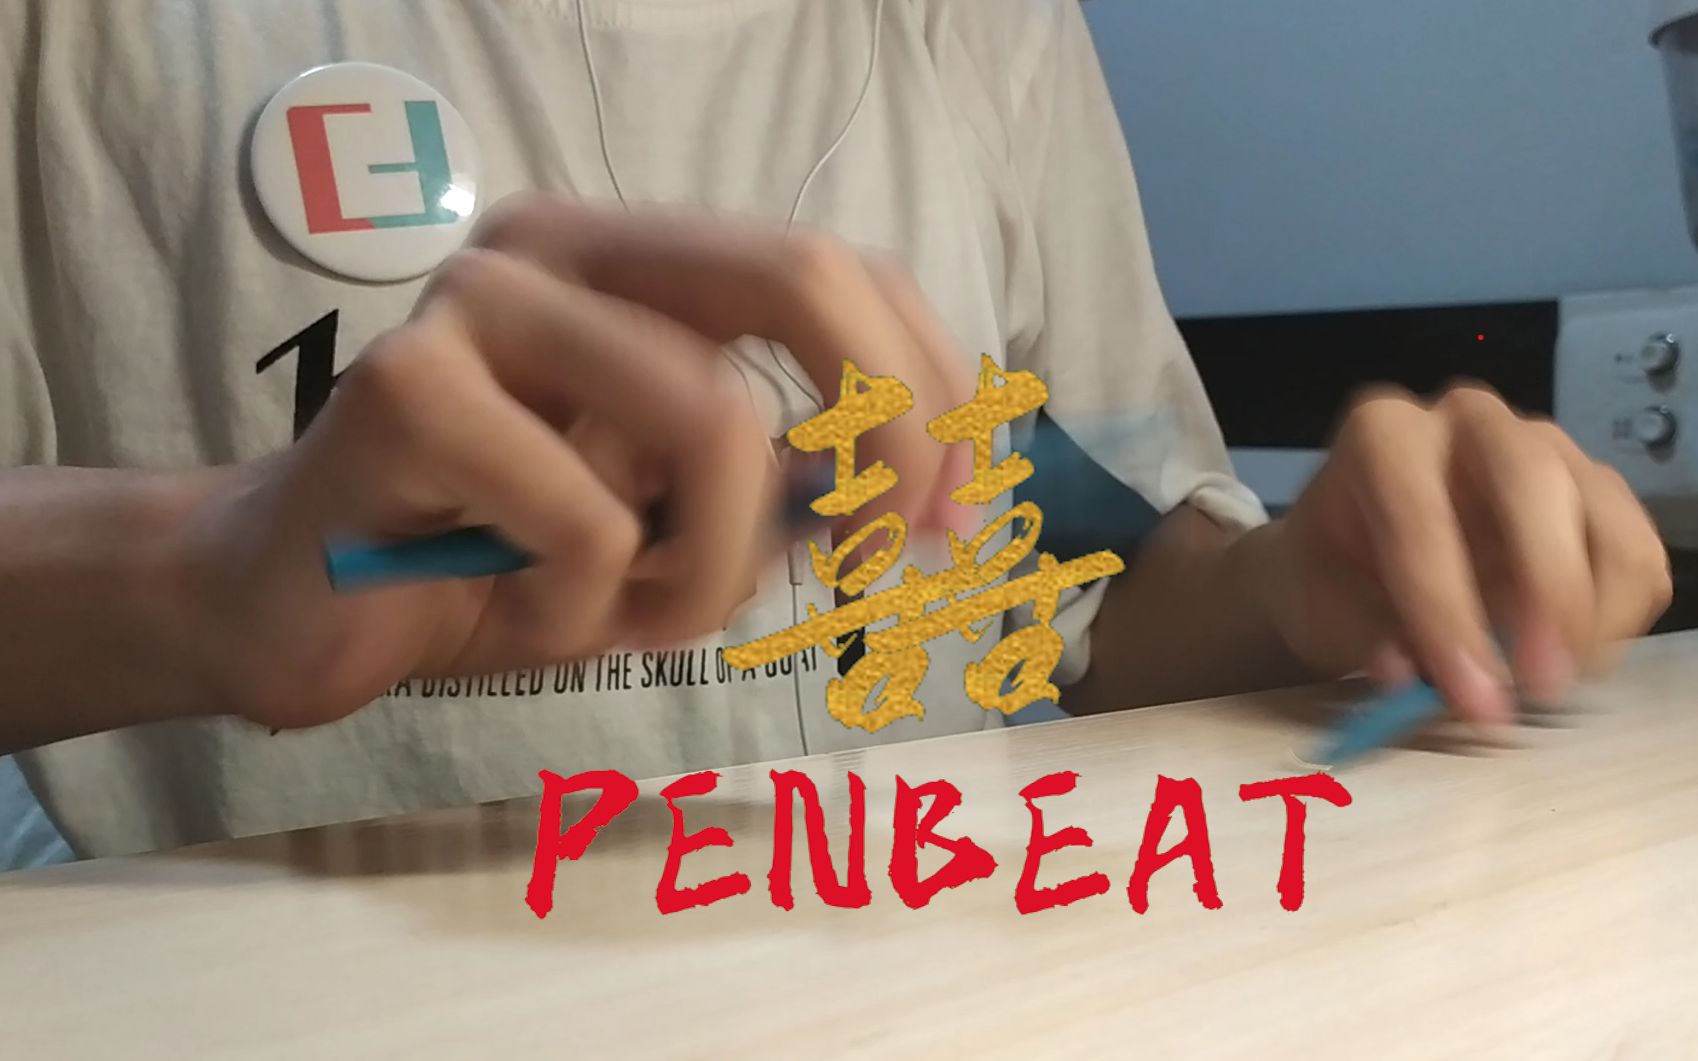 penbeat谱子囍图片